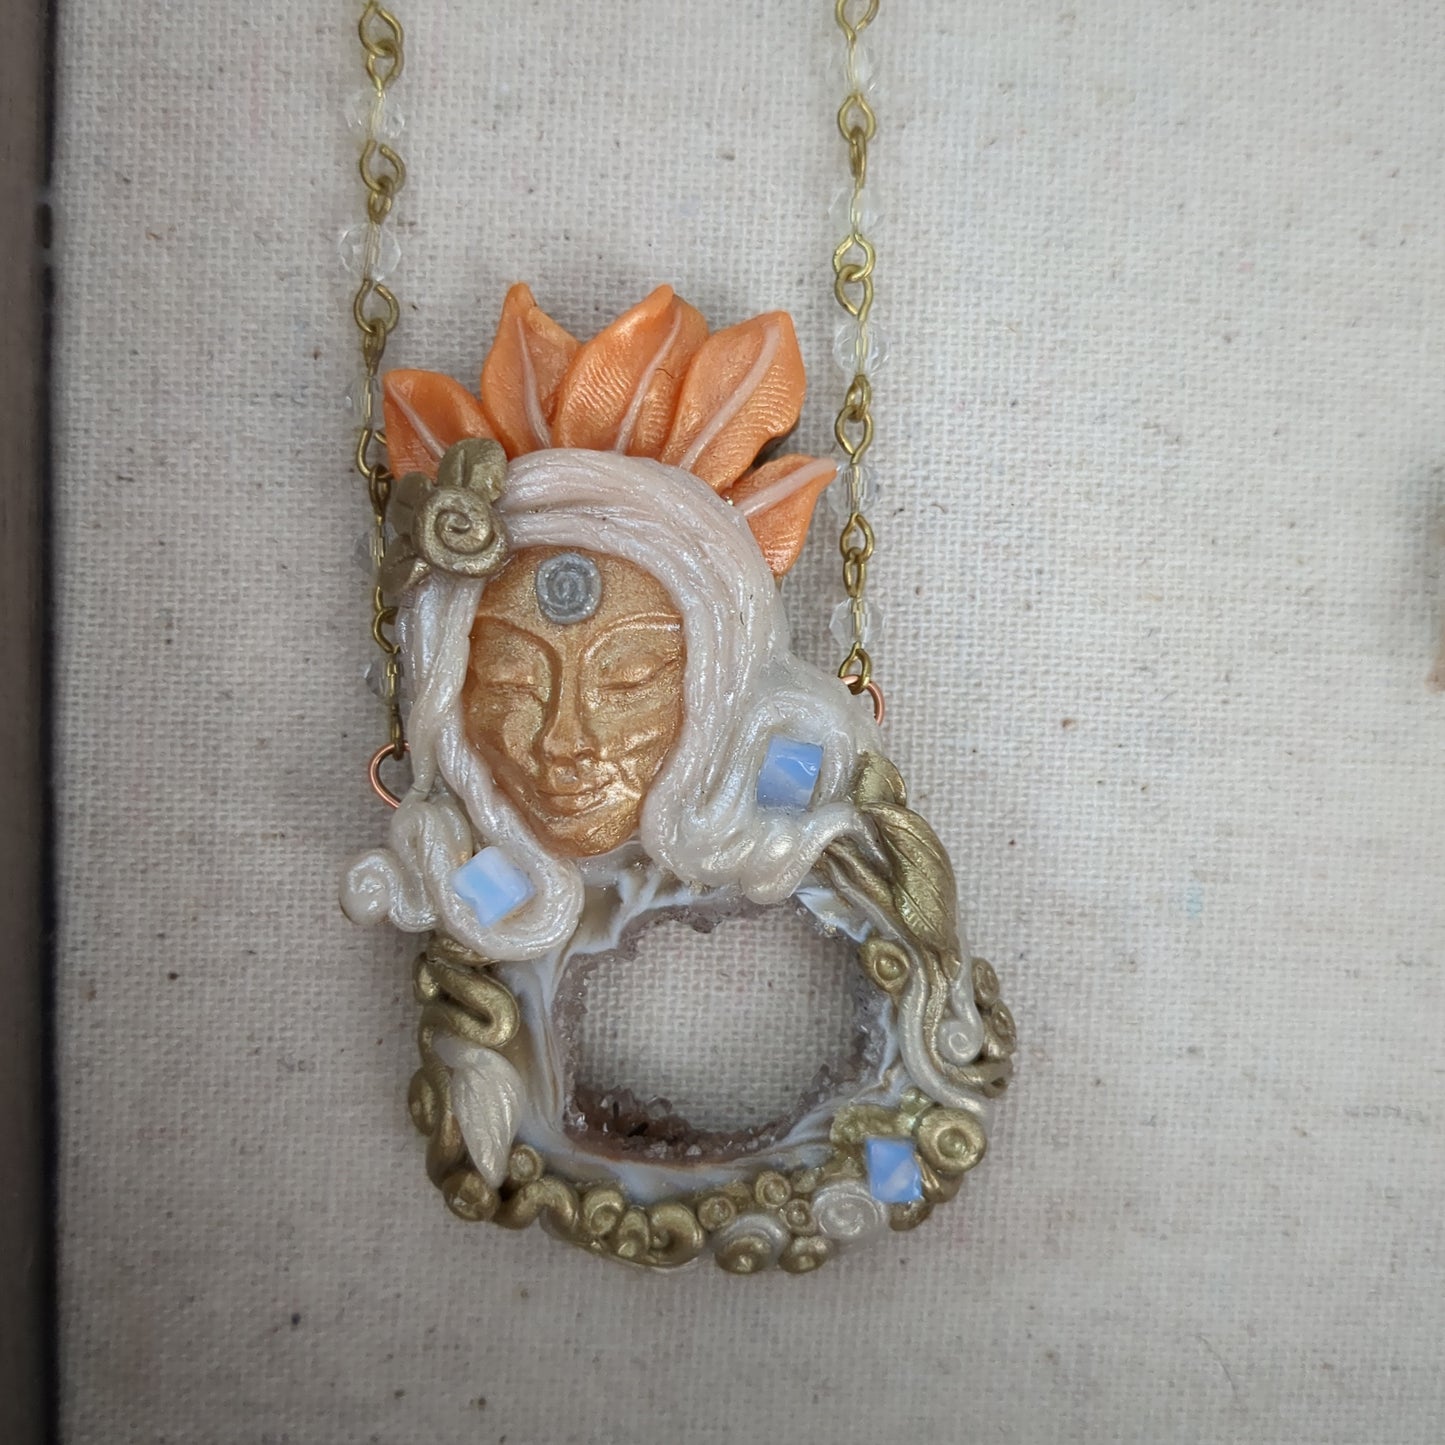 Goddess with agate slice pendant